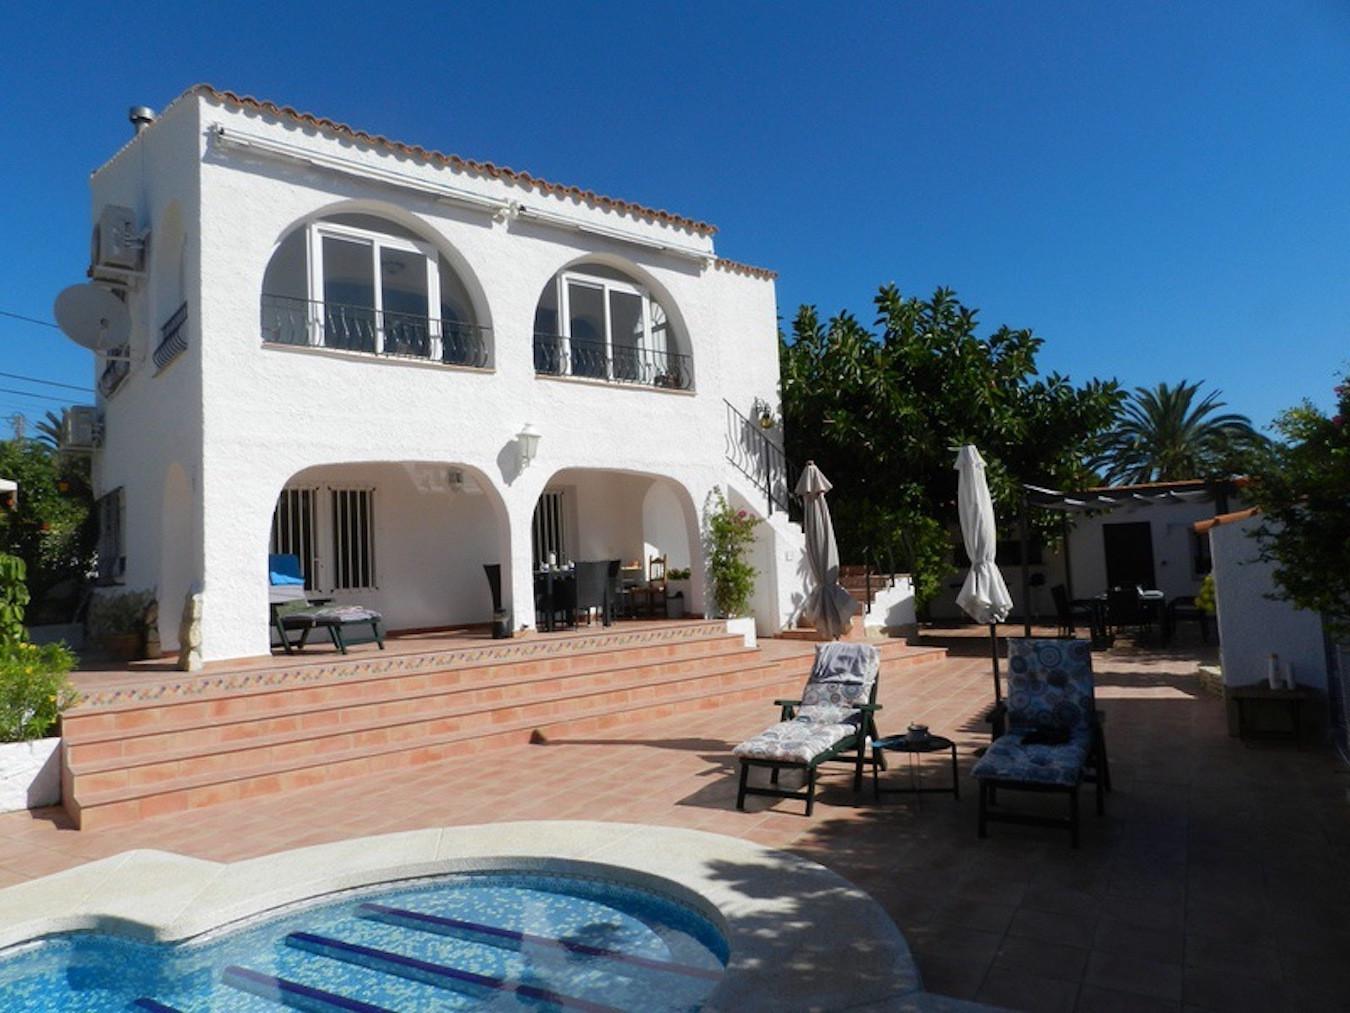 Ferienhaus mit Privatpool für 8 Personen ca 160 m² in Calp Valencia Costa Blanca